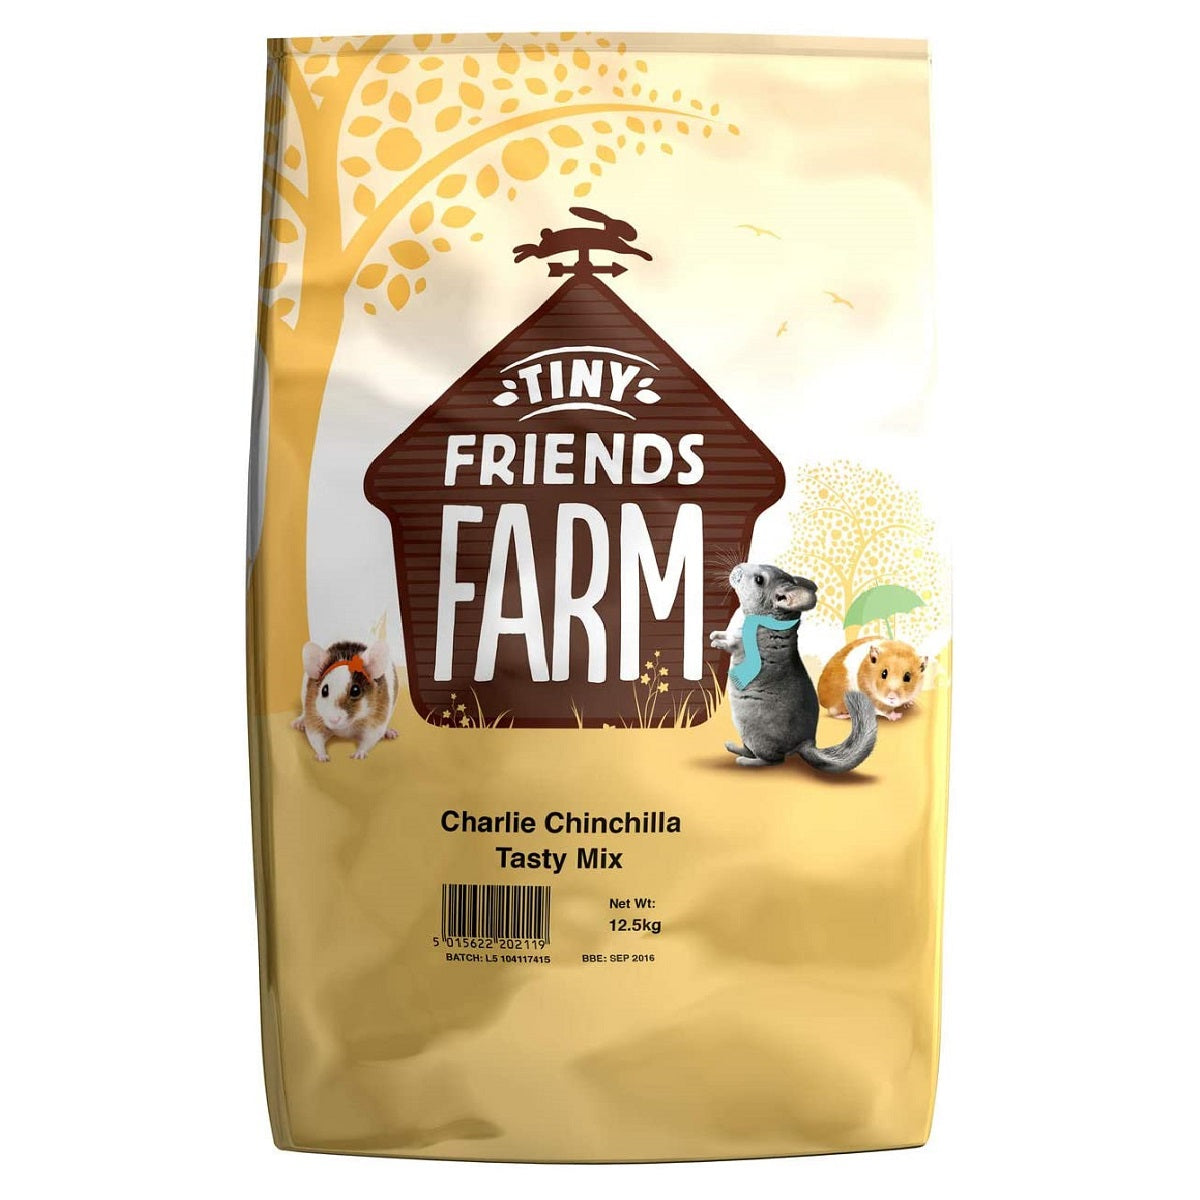 Tiny Friends Farm - Charlie Chinchilla Tasty Mix